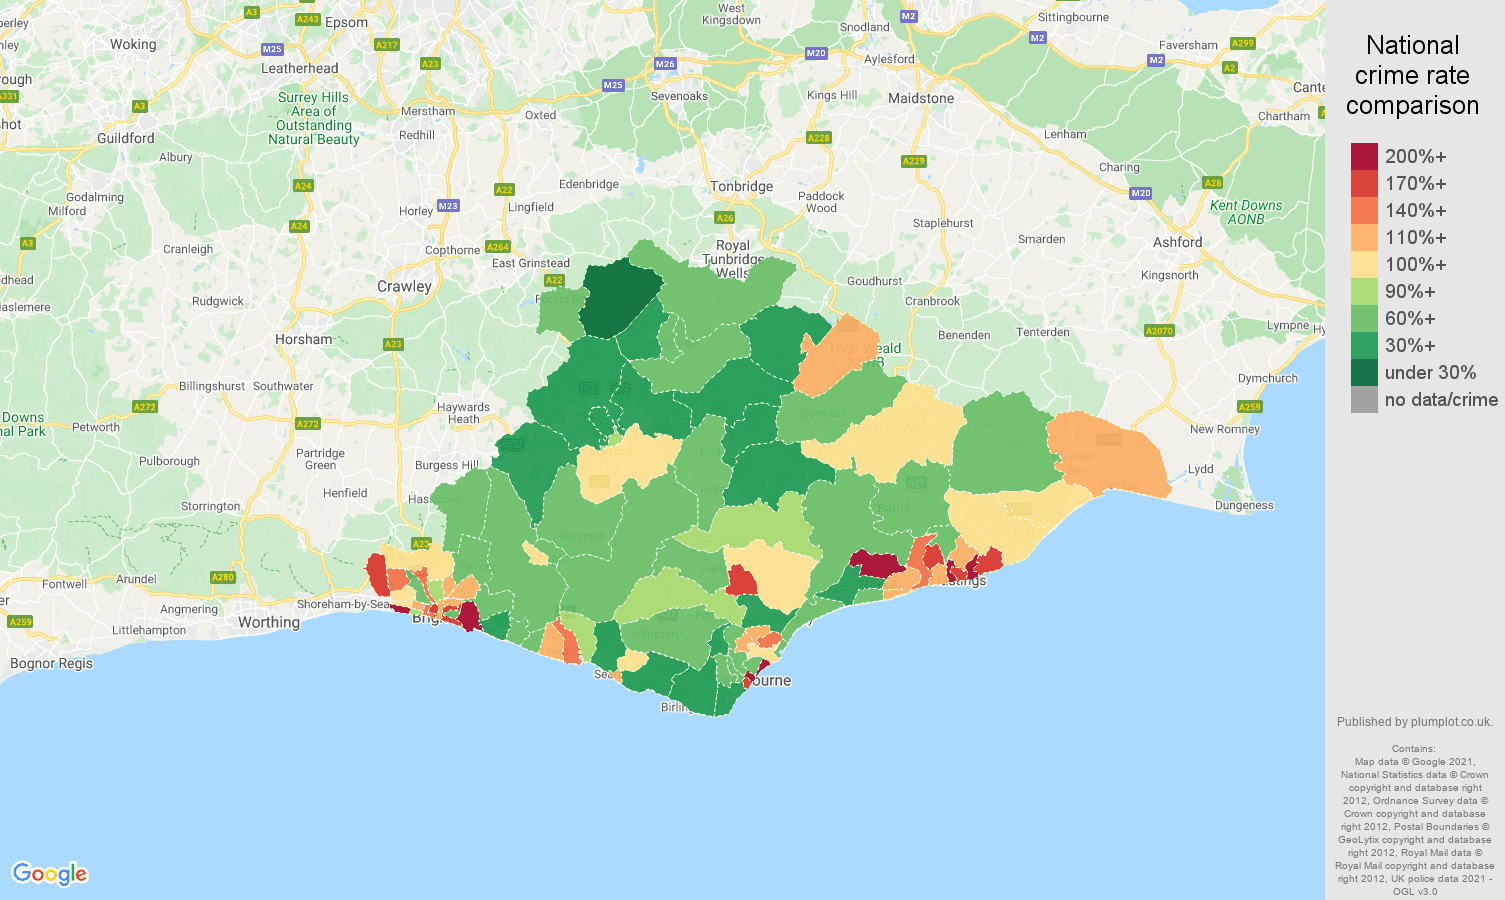 East Sussex criminal damage and arson crime rate comparison map